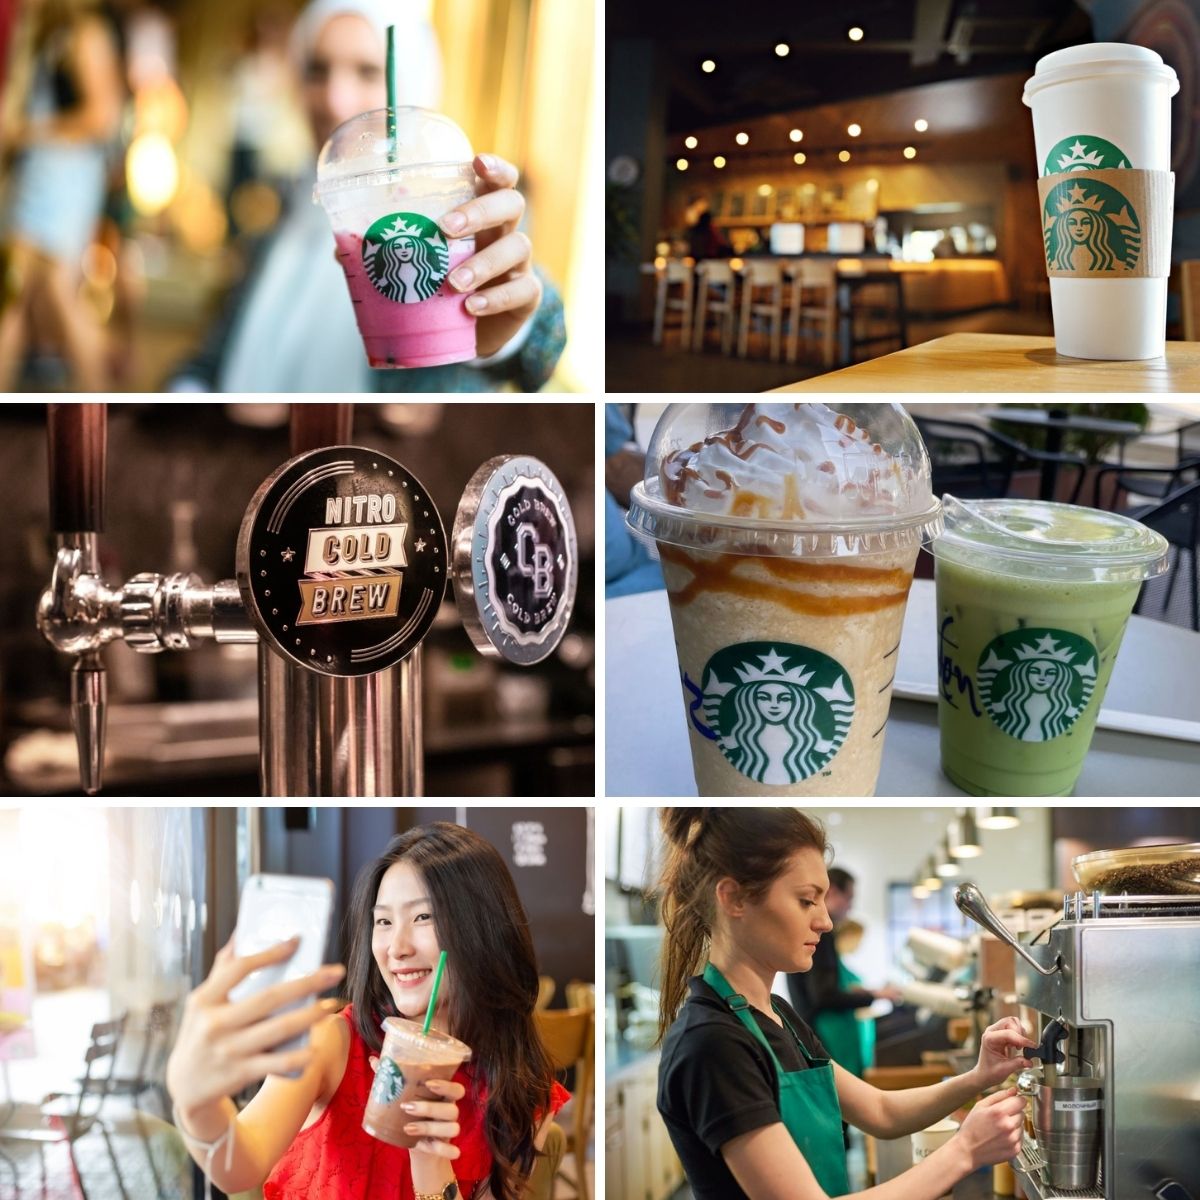 Collage photo featuring images of tik-tok starbucks drinks.